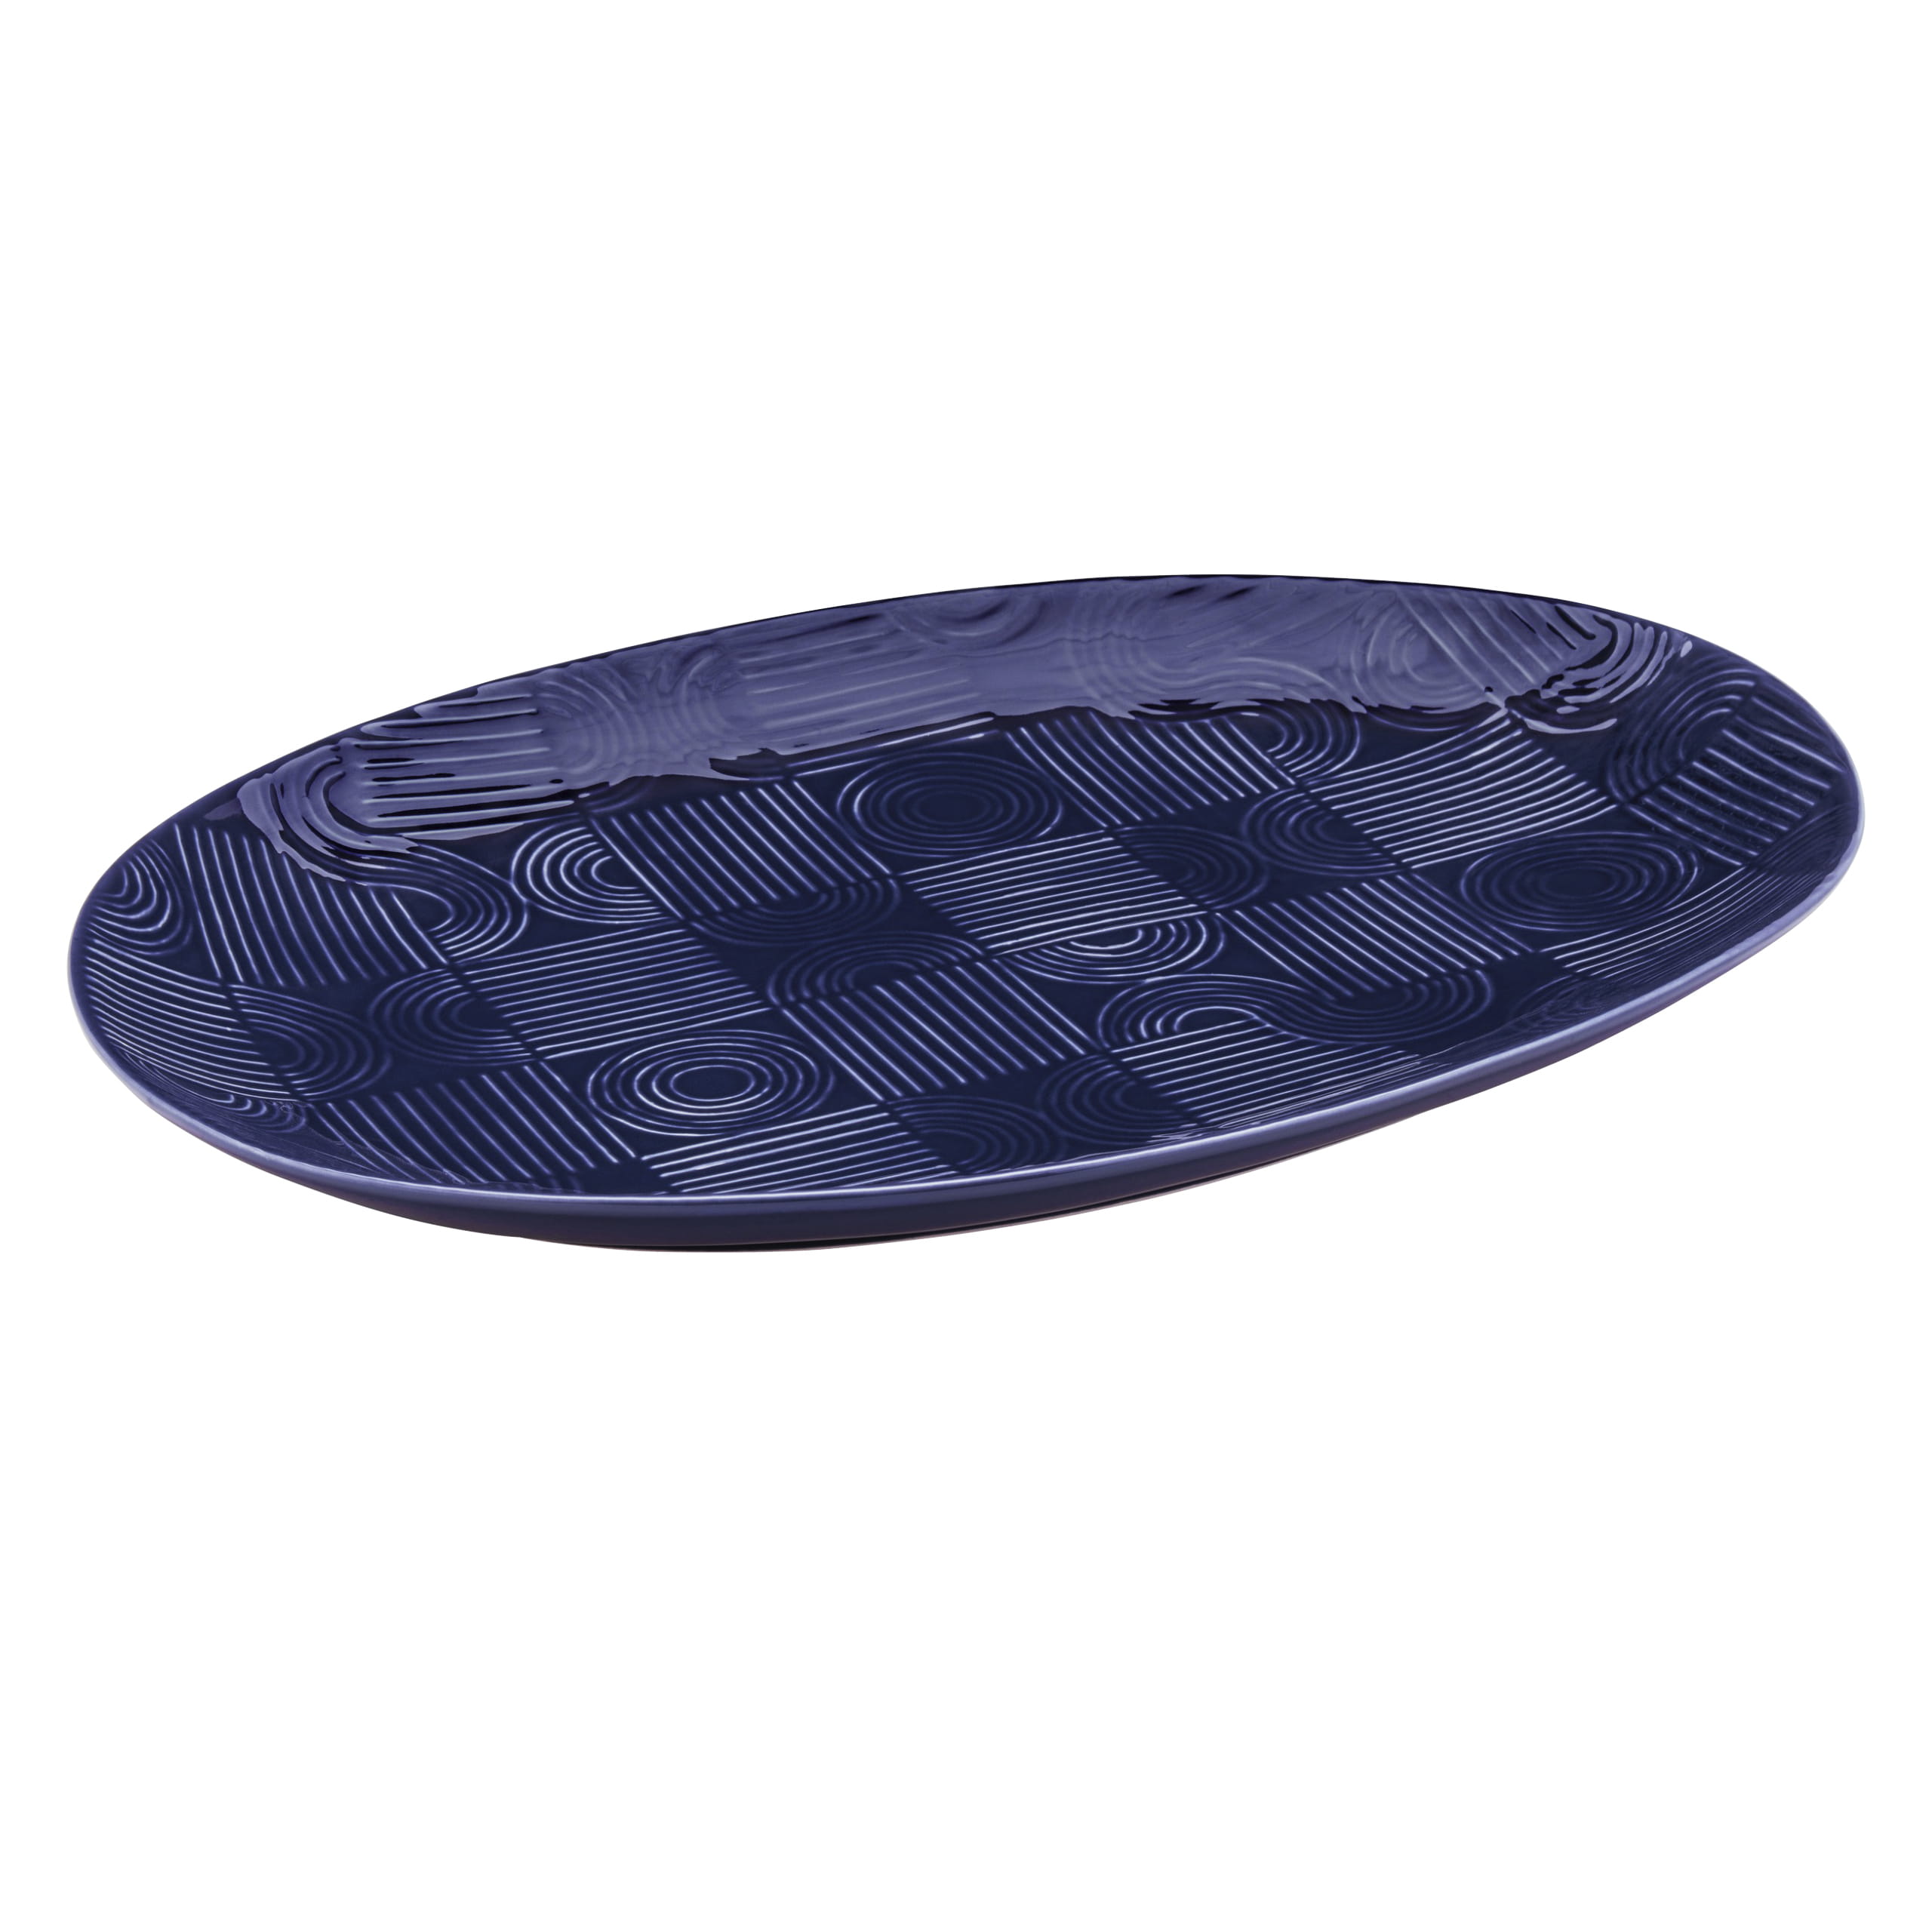 ARC Platte oval, 41 x 30 cm, Indigoblau, Keramik, in Geschenkbox